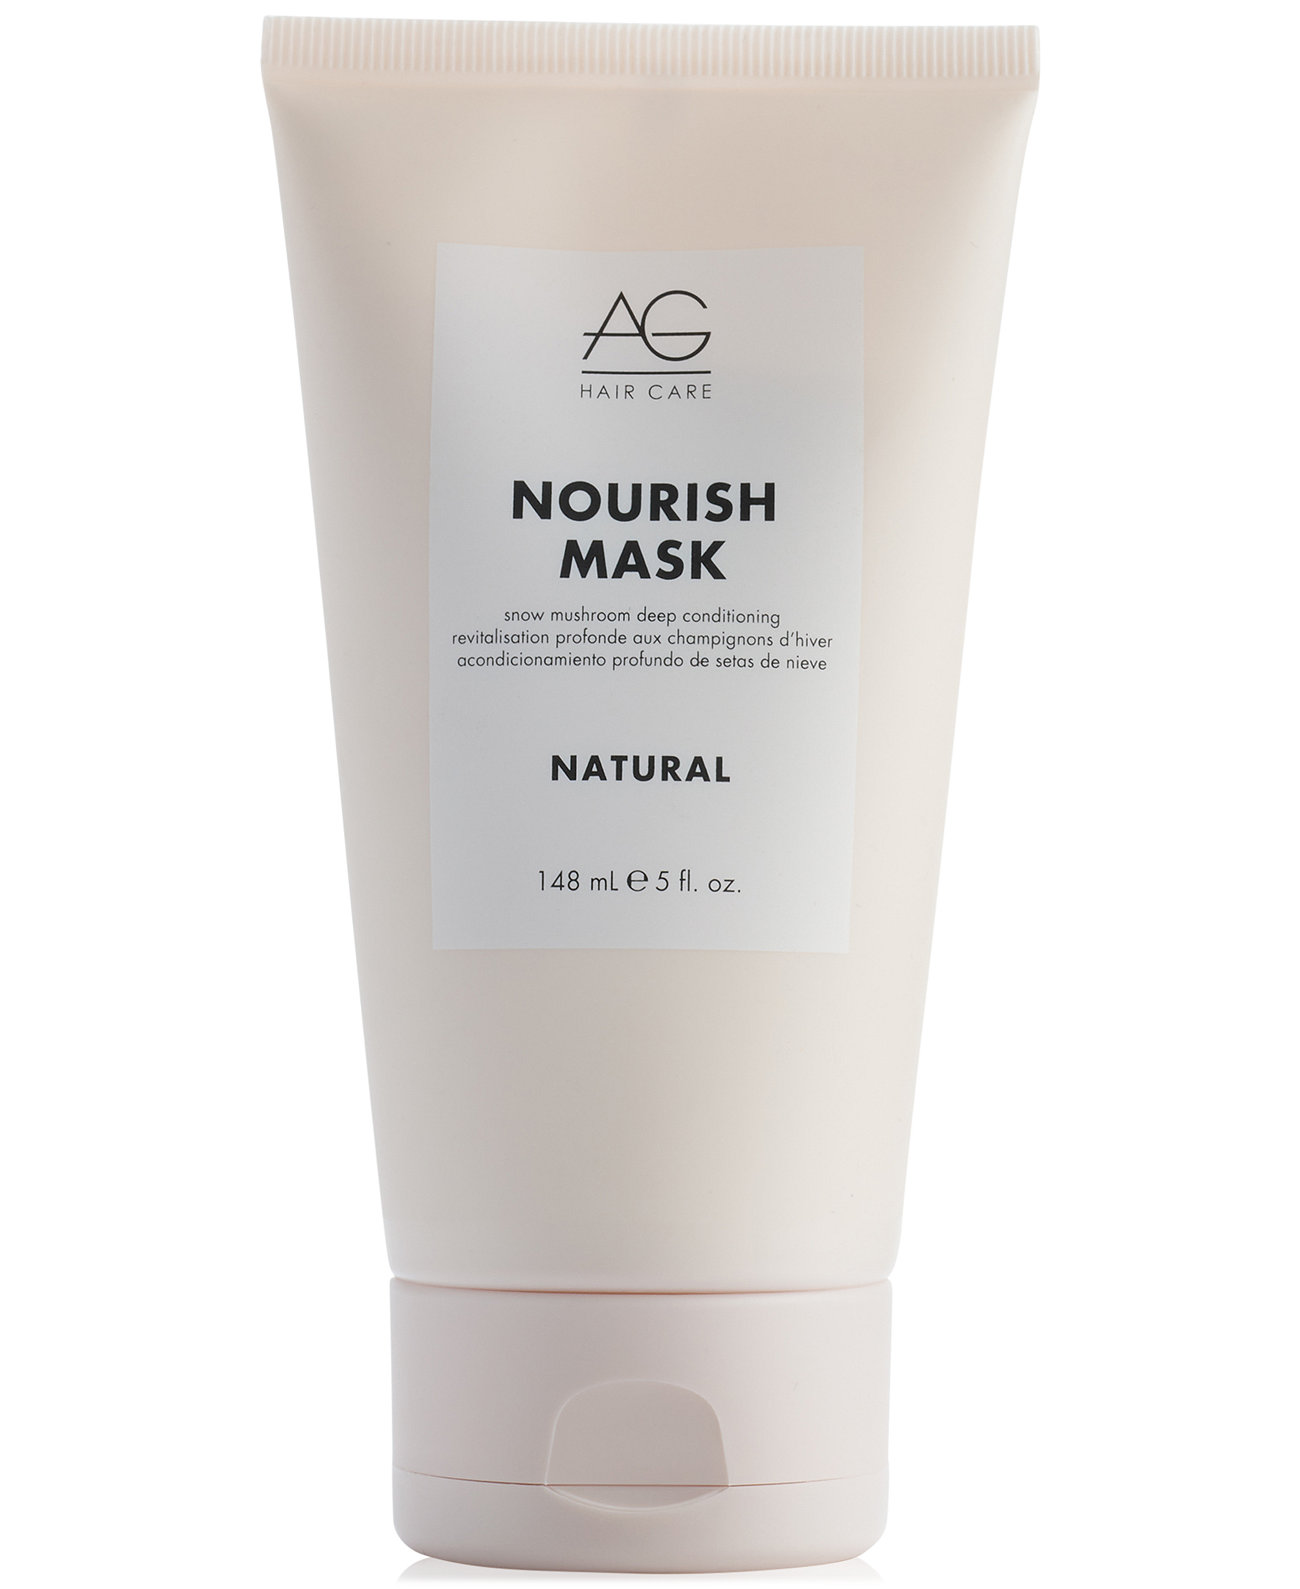 Natural Nourish Mask Snow Mushroom Deep Conditioning, 5 унций, от PUREBEAUTY Salon & Spa AG Hair